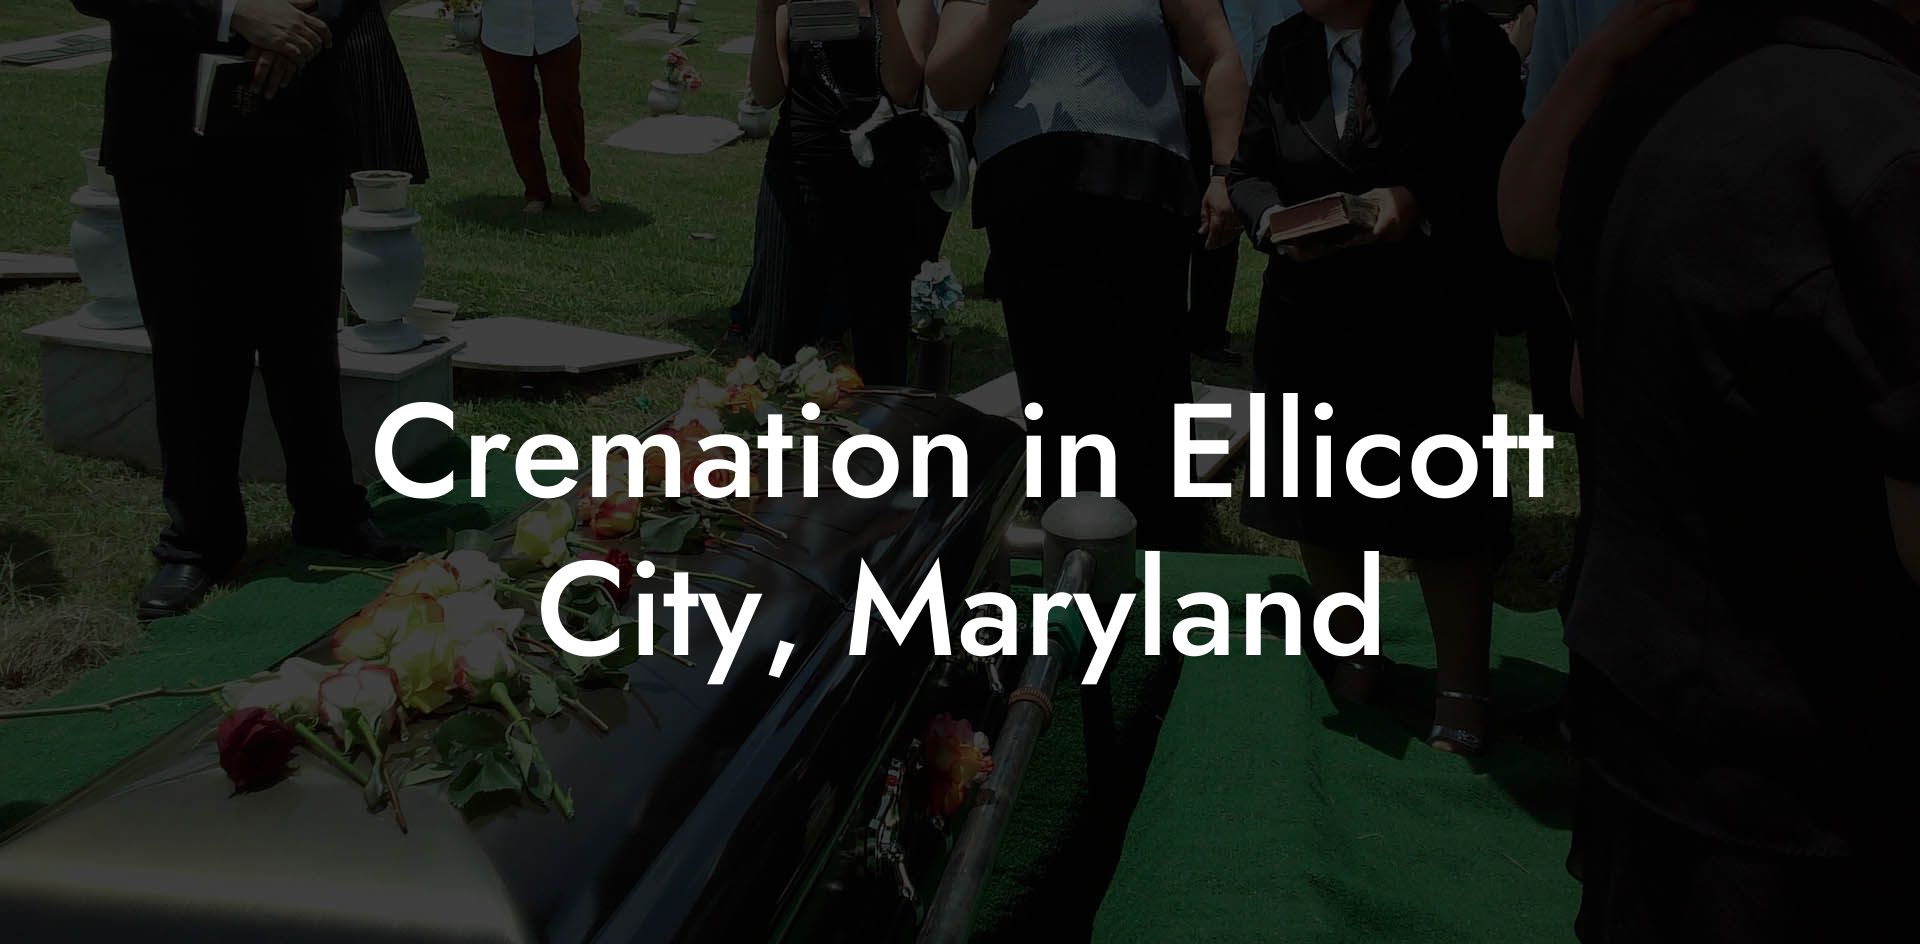 Cremation in Ellicott City, Maryland